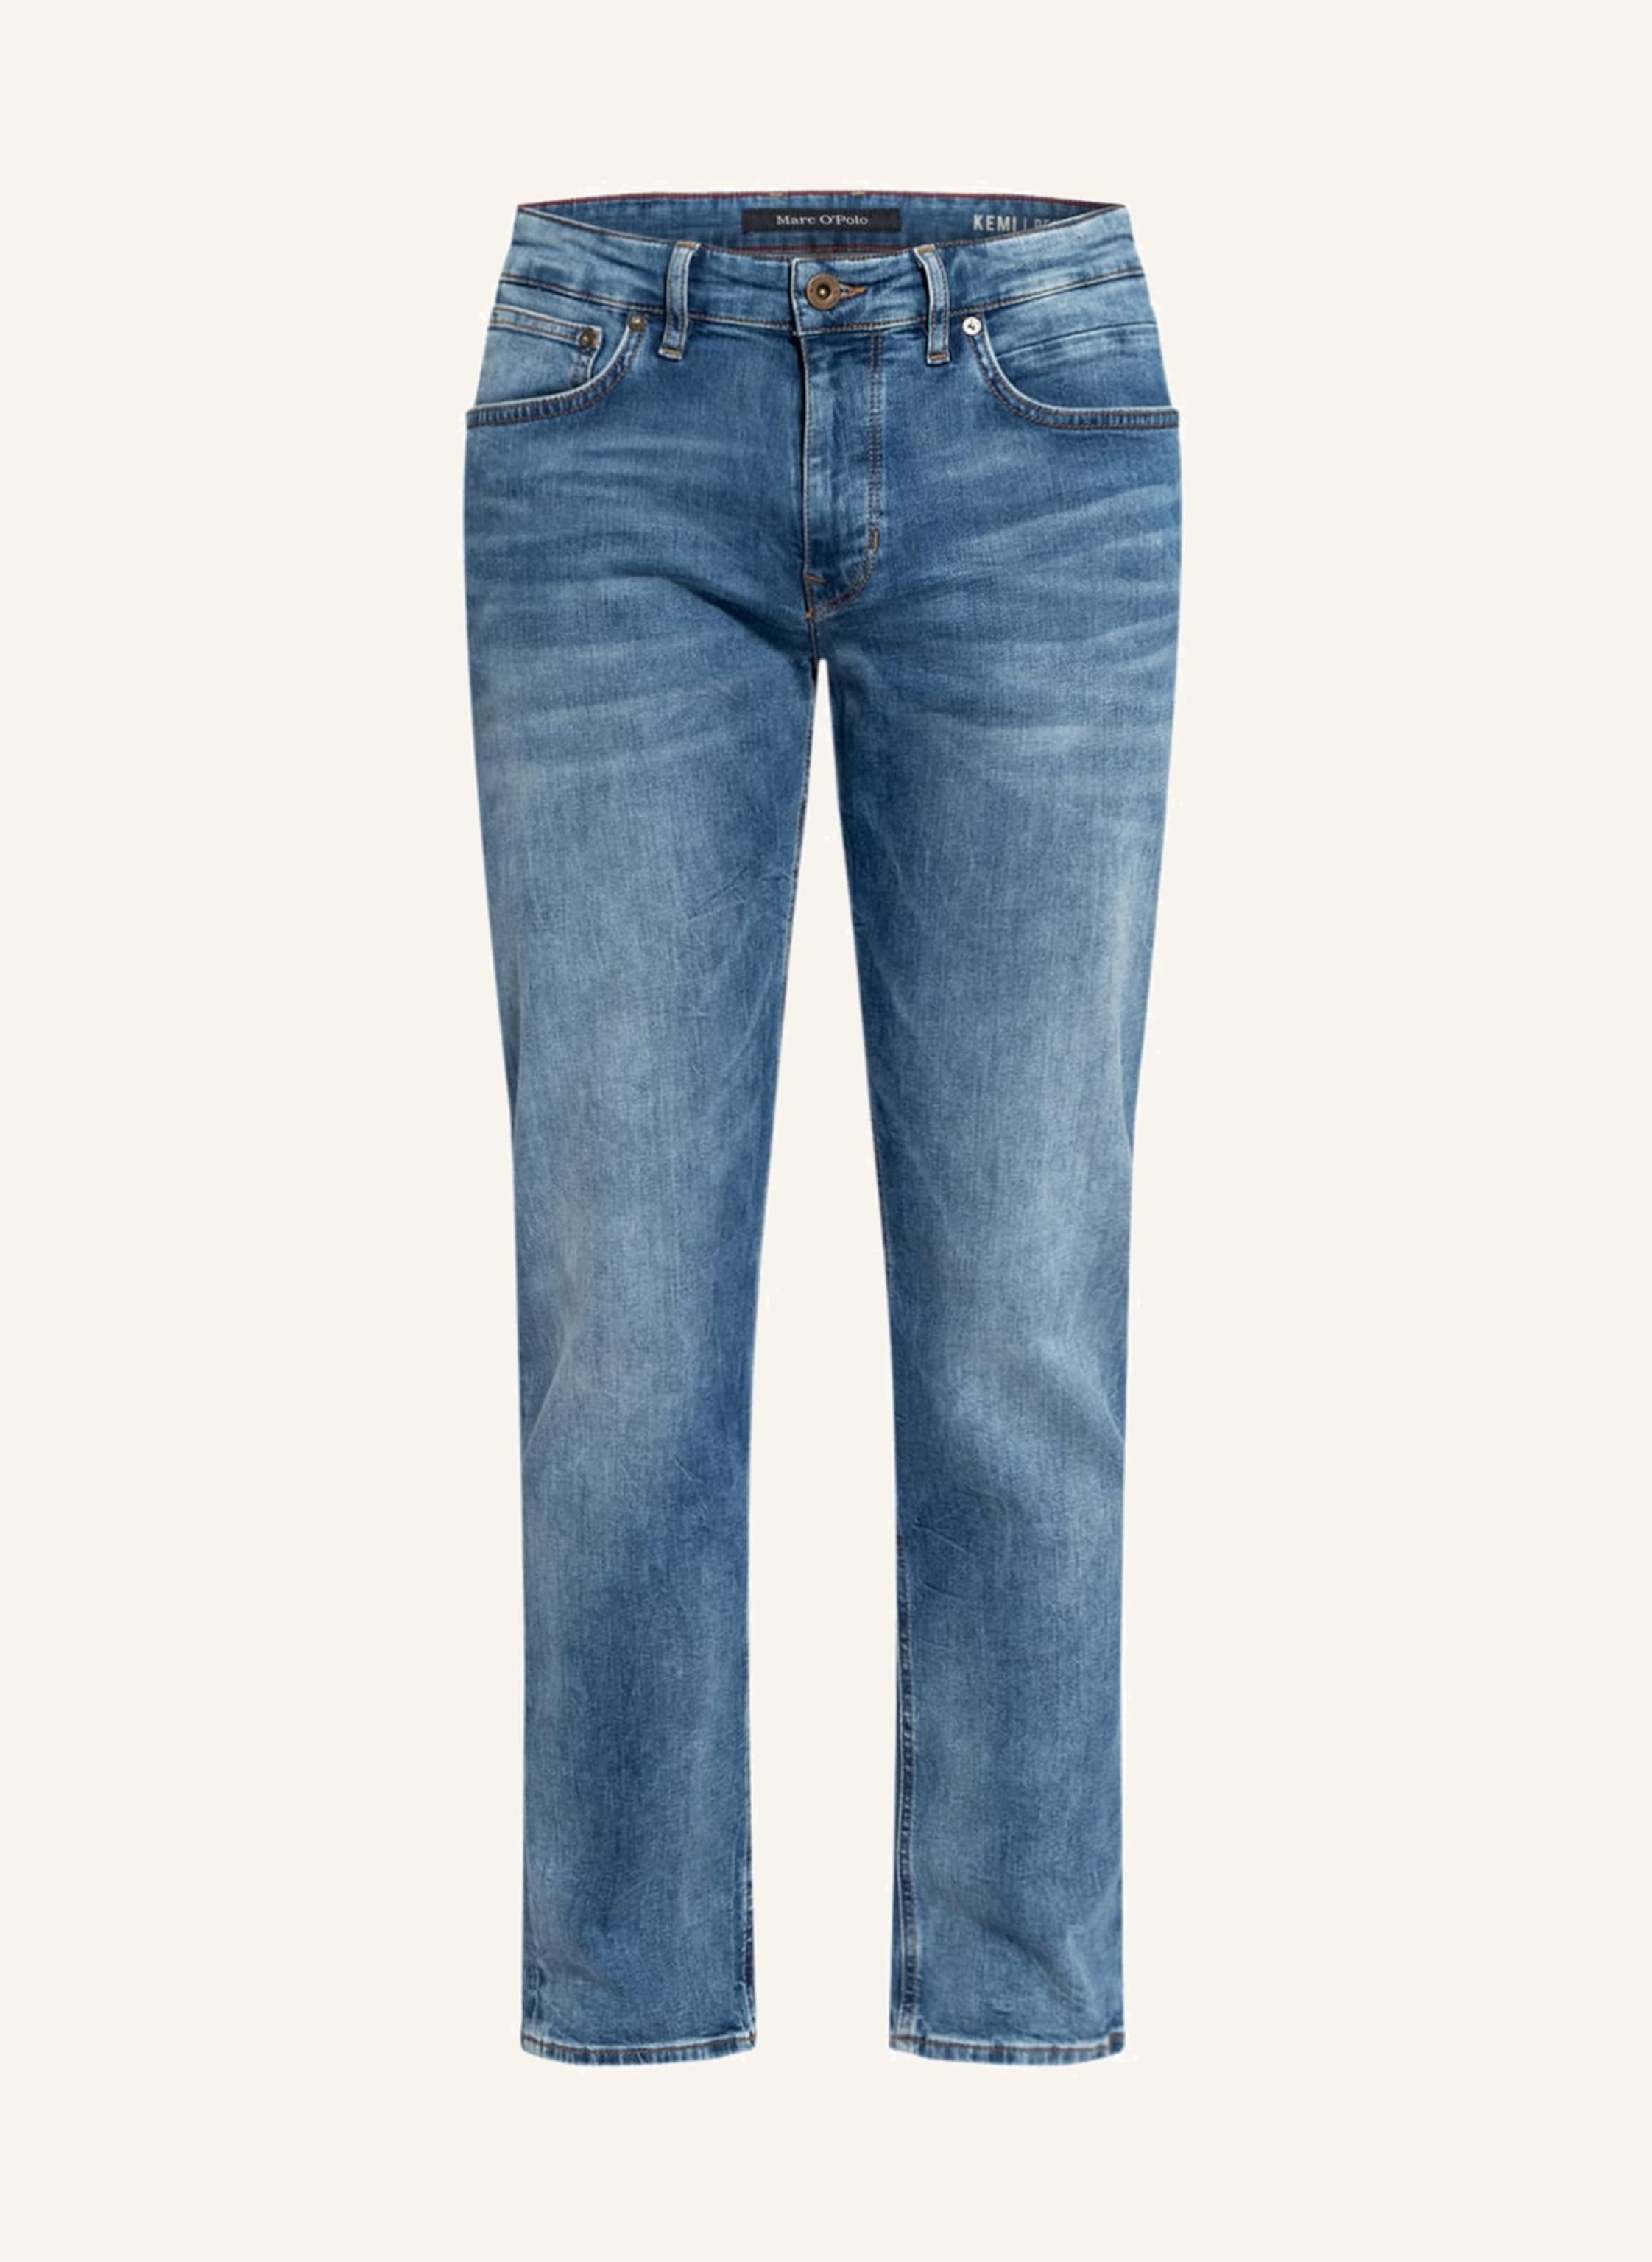 Marc O'polo Jeans Regular Fit Mit VerkÃ¼rzter BeinlÃ¤nge blau